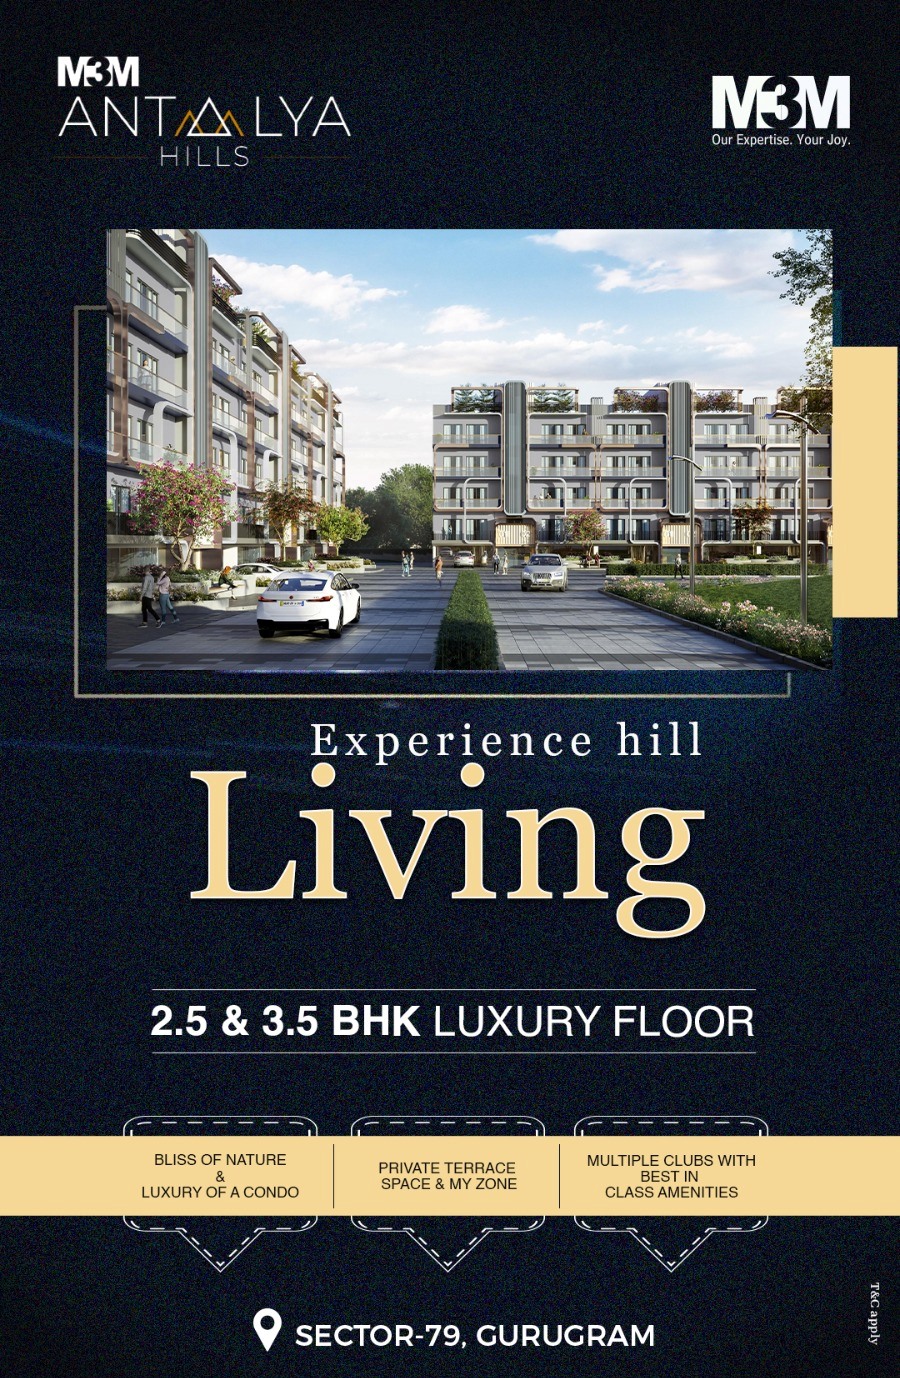 Experience hill living at M3M Antalya Hills in Sec 79, Gurgaon